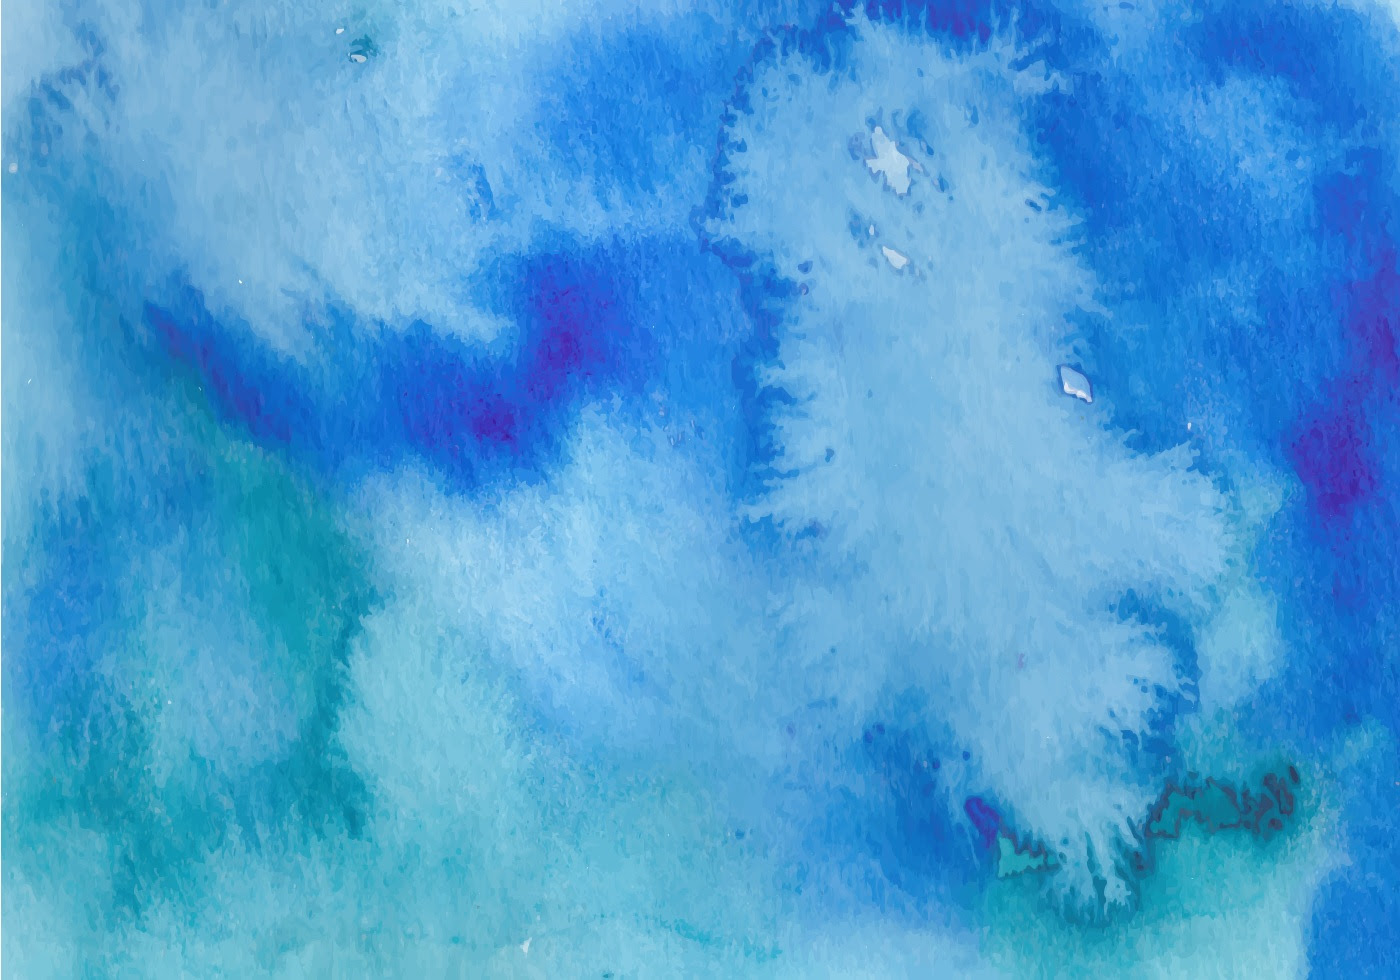 Dark Blue Free Vector Watercolor Background - Download ...